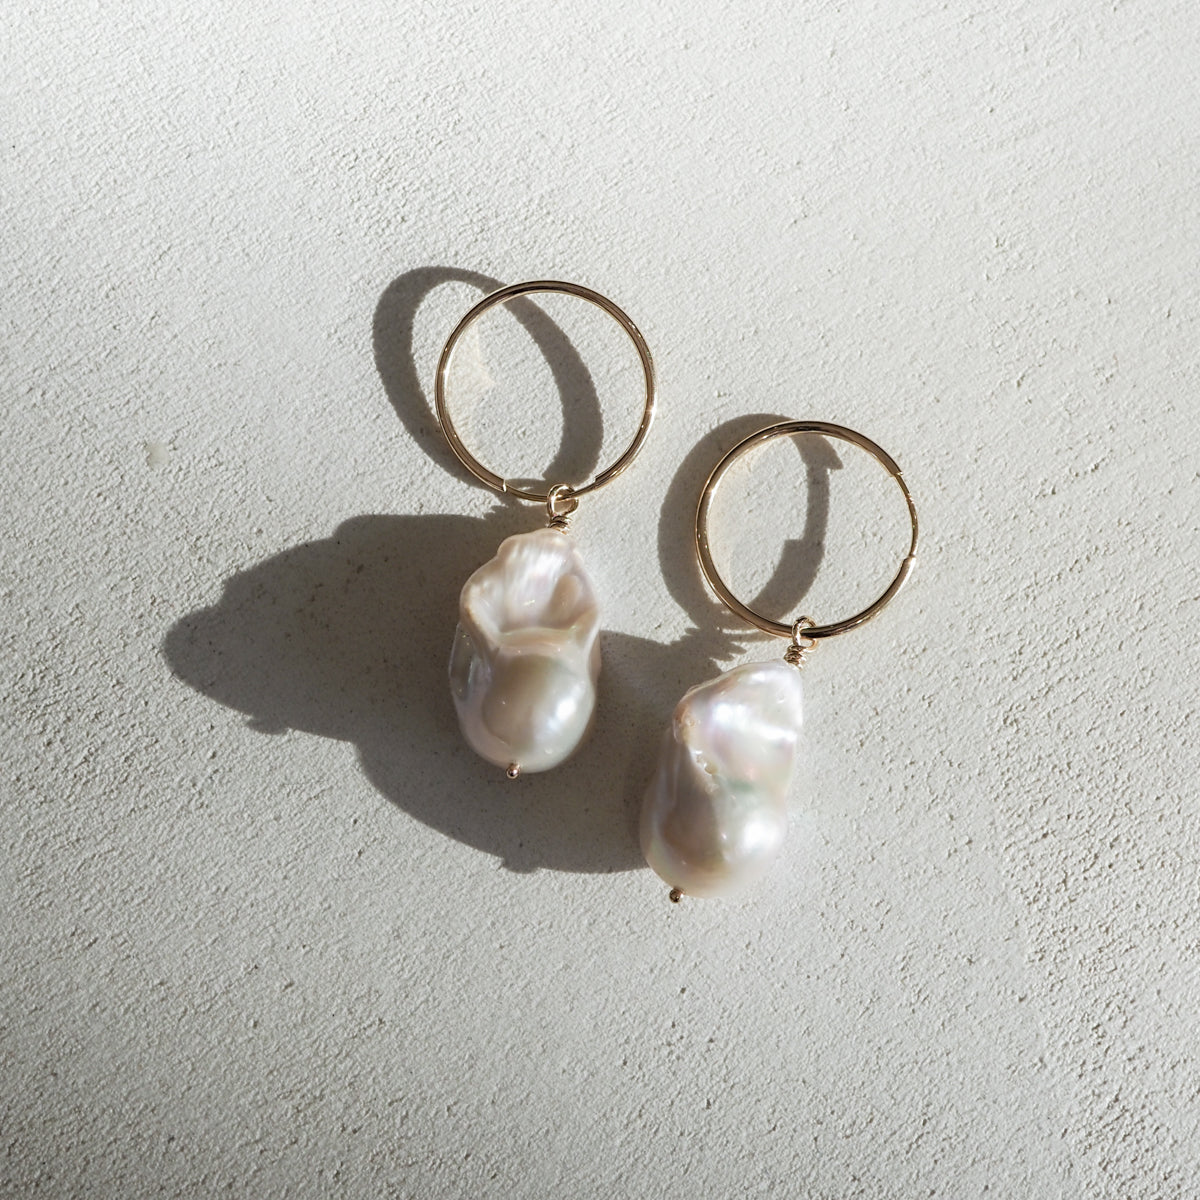 Buy 18mm Big Pearl Earrings, Round Ball Shape Pearl Earrings, Large Pearl  Earrings, Light Weight Pearl Earrings, Plastics Pearl Earrings Online in  India - Etsy